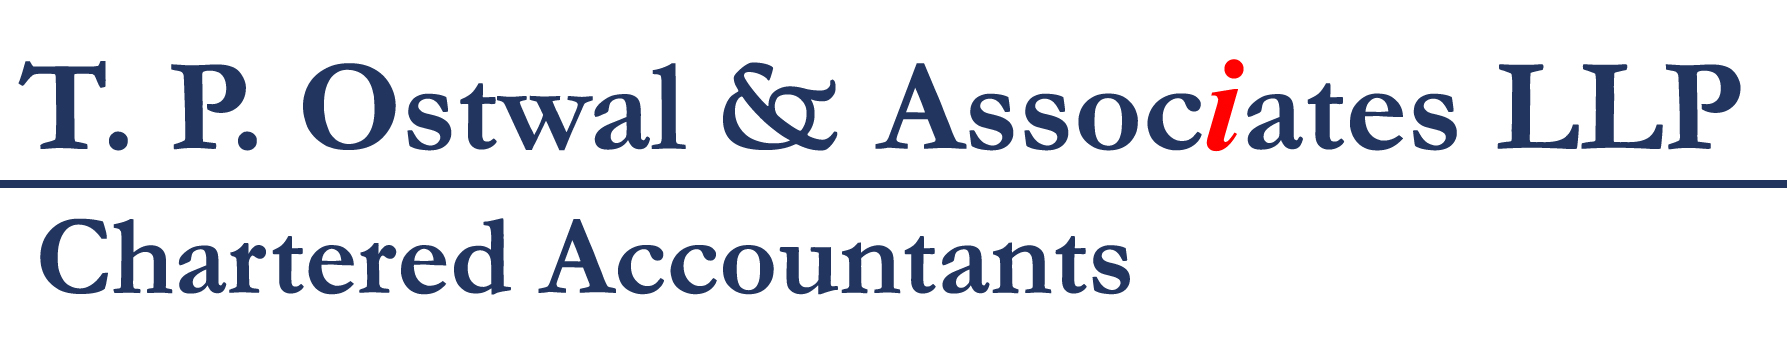 T.P. Ostwal & Associates LLP Chartered Accountants